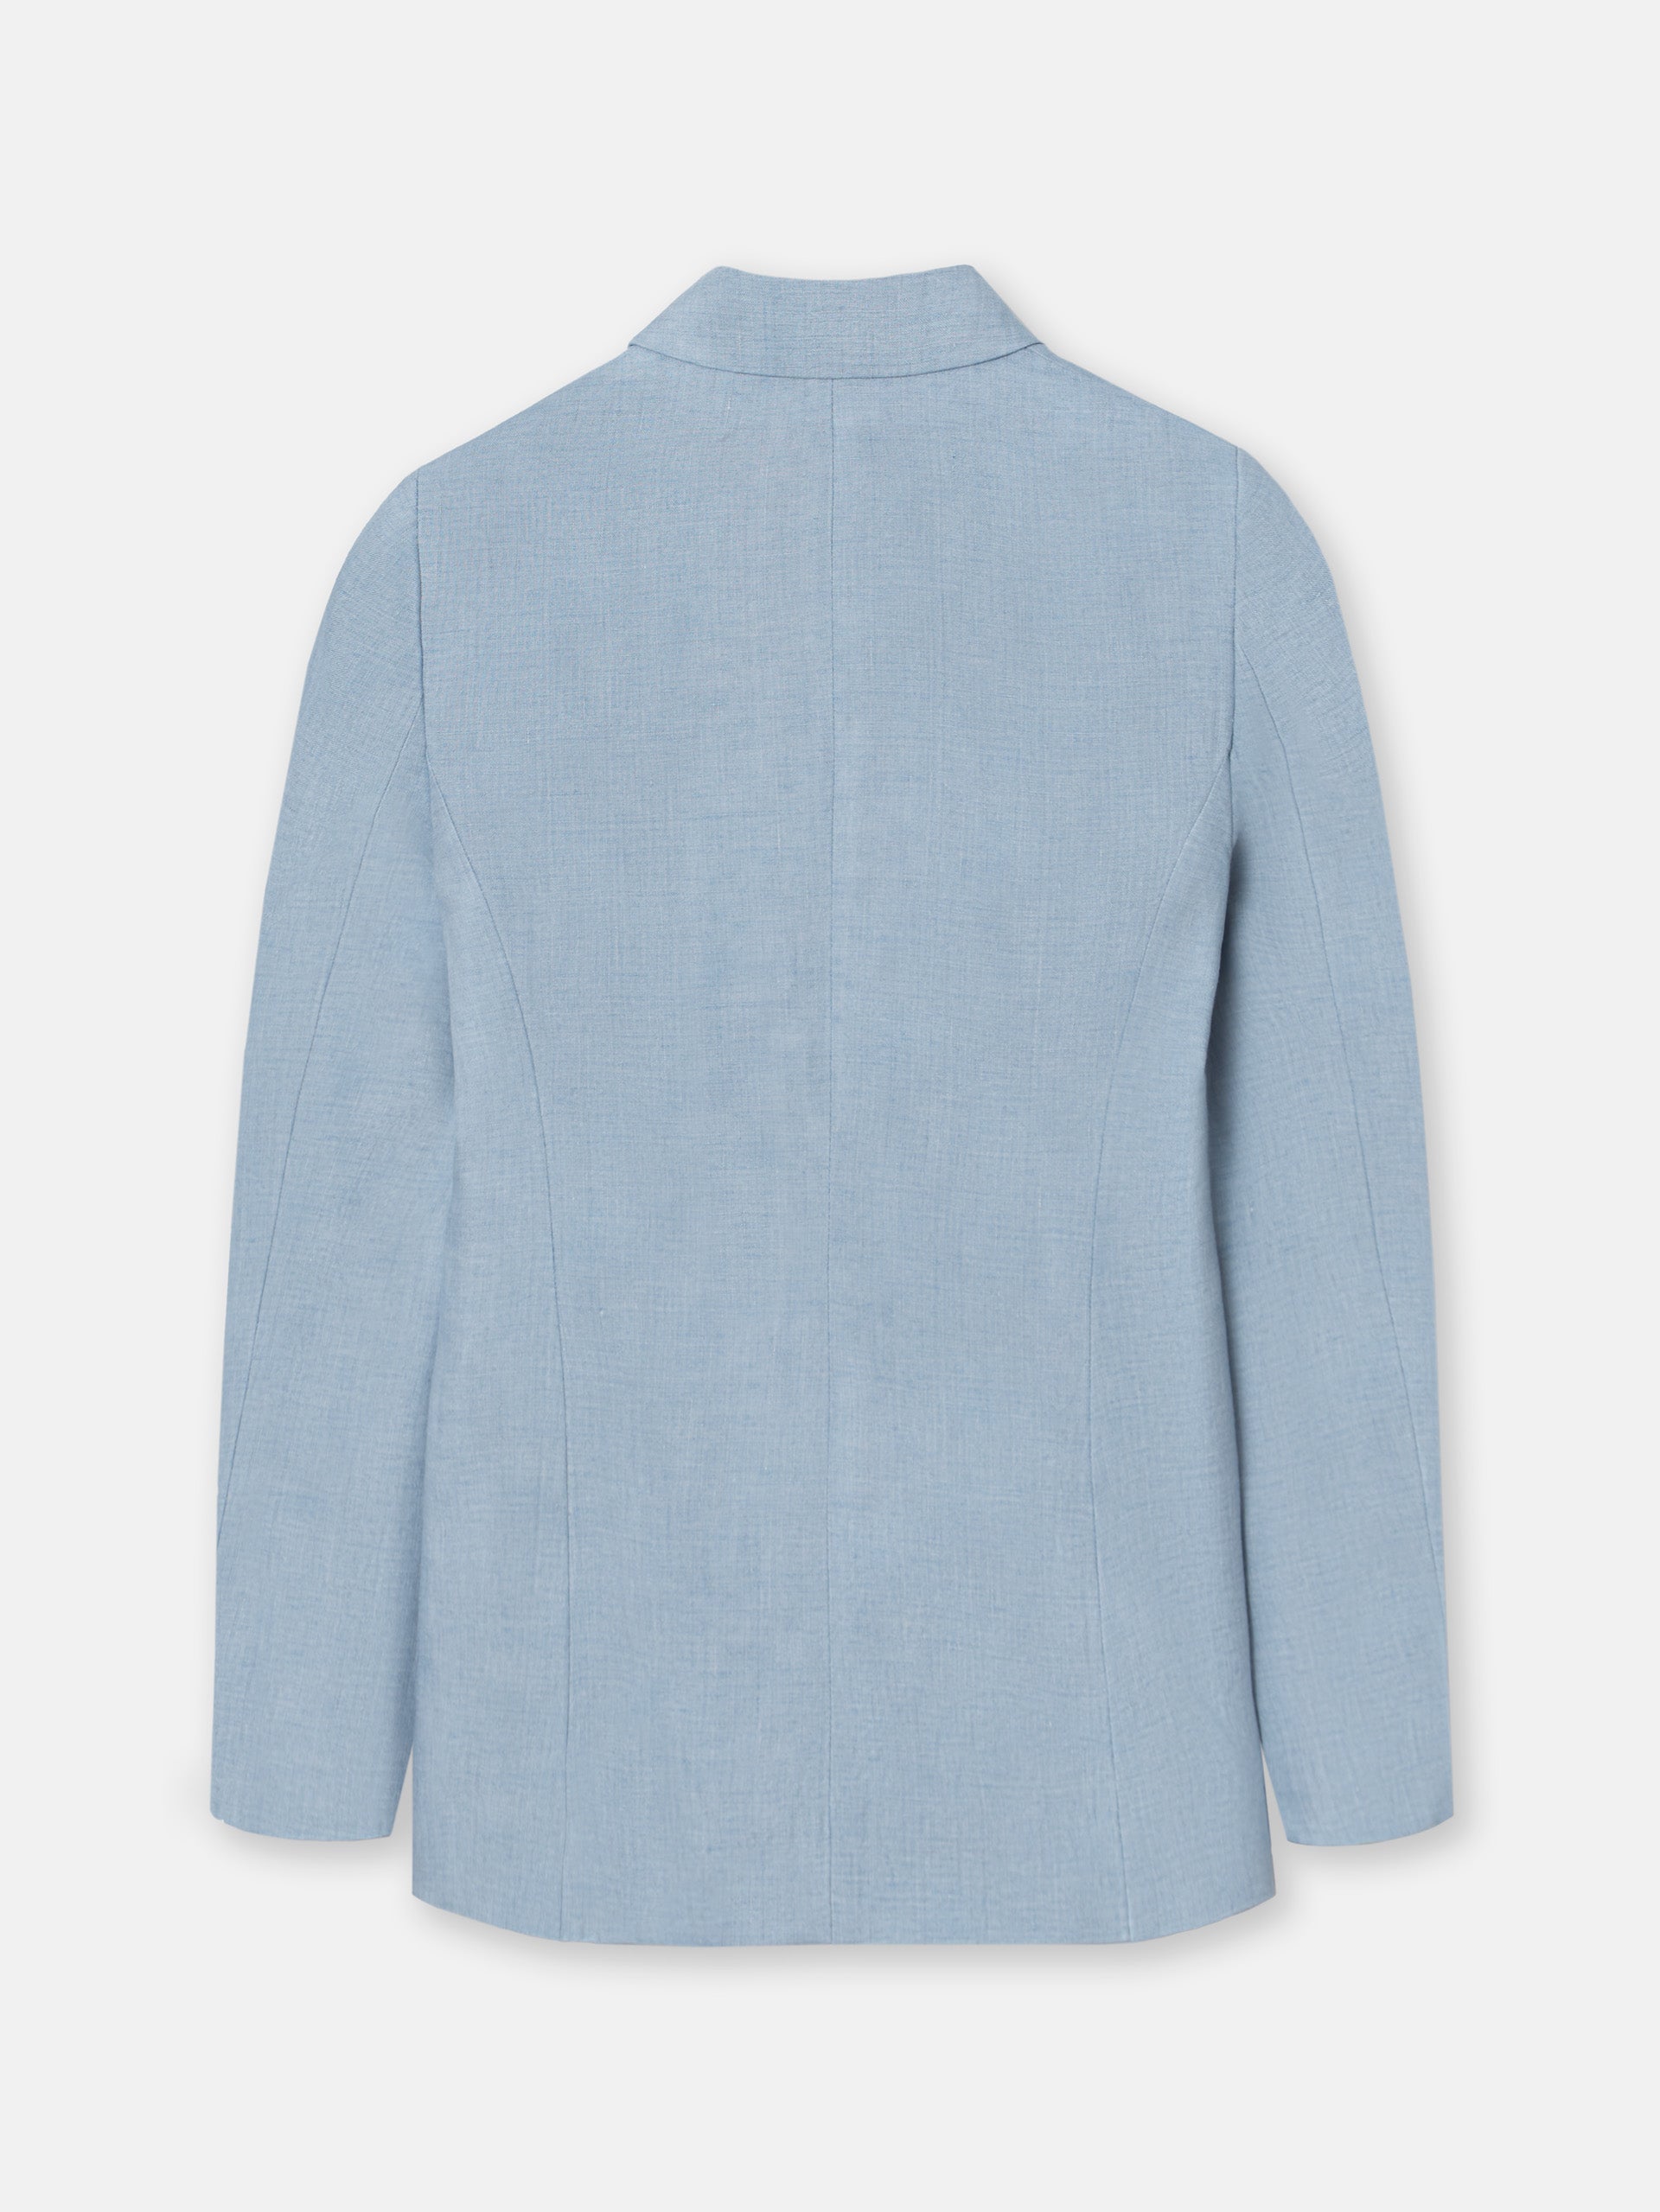 Women's blue denim double-breasted jacket